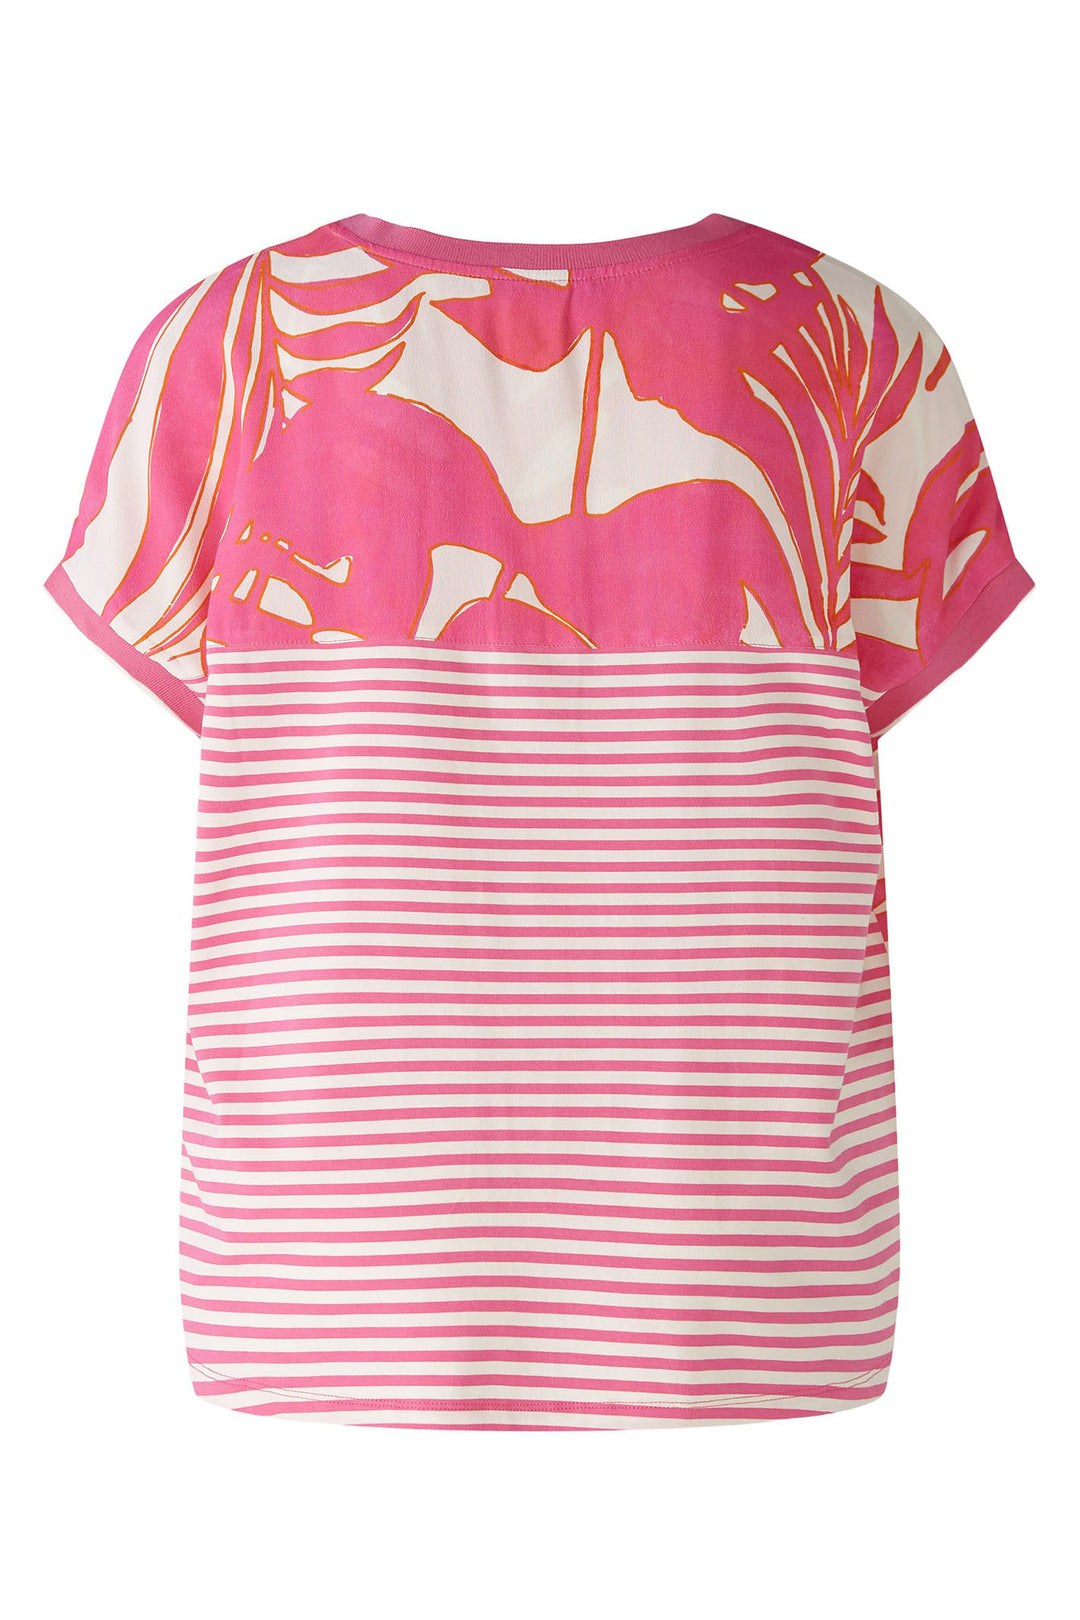 Oui 87505 Pink White Tropical Leaf Print Stripe Back Top - Dotique